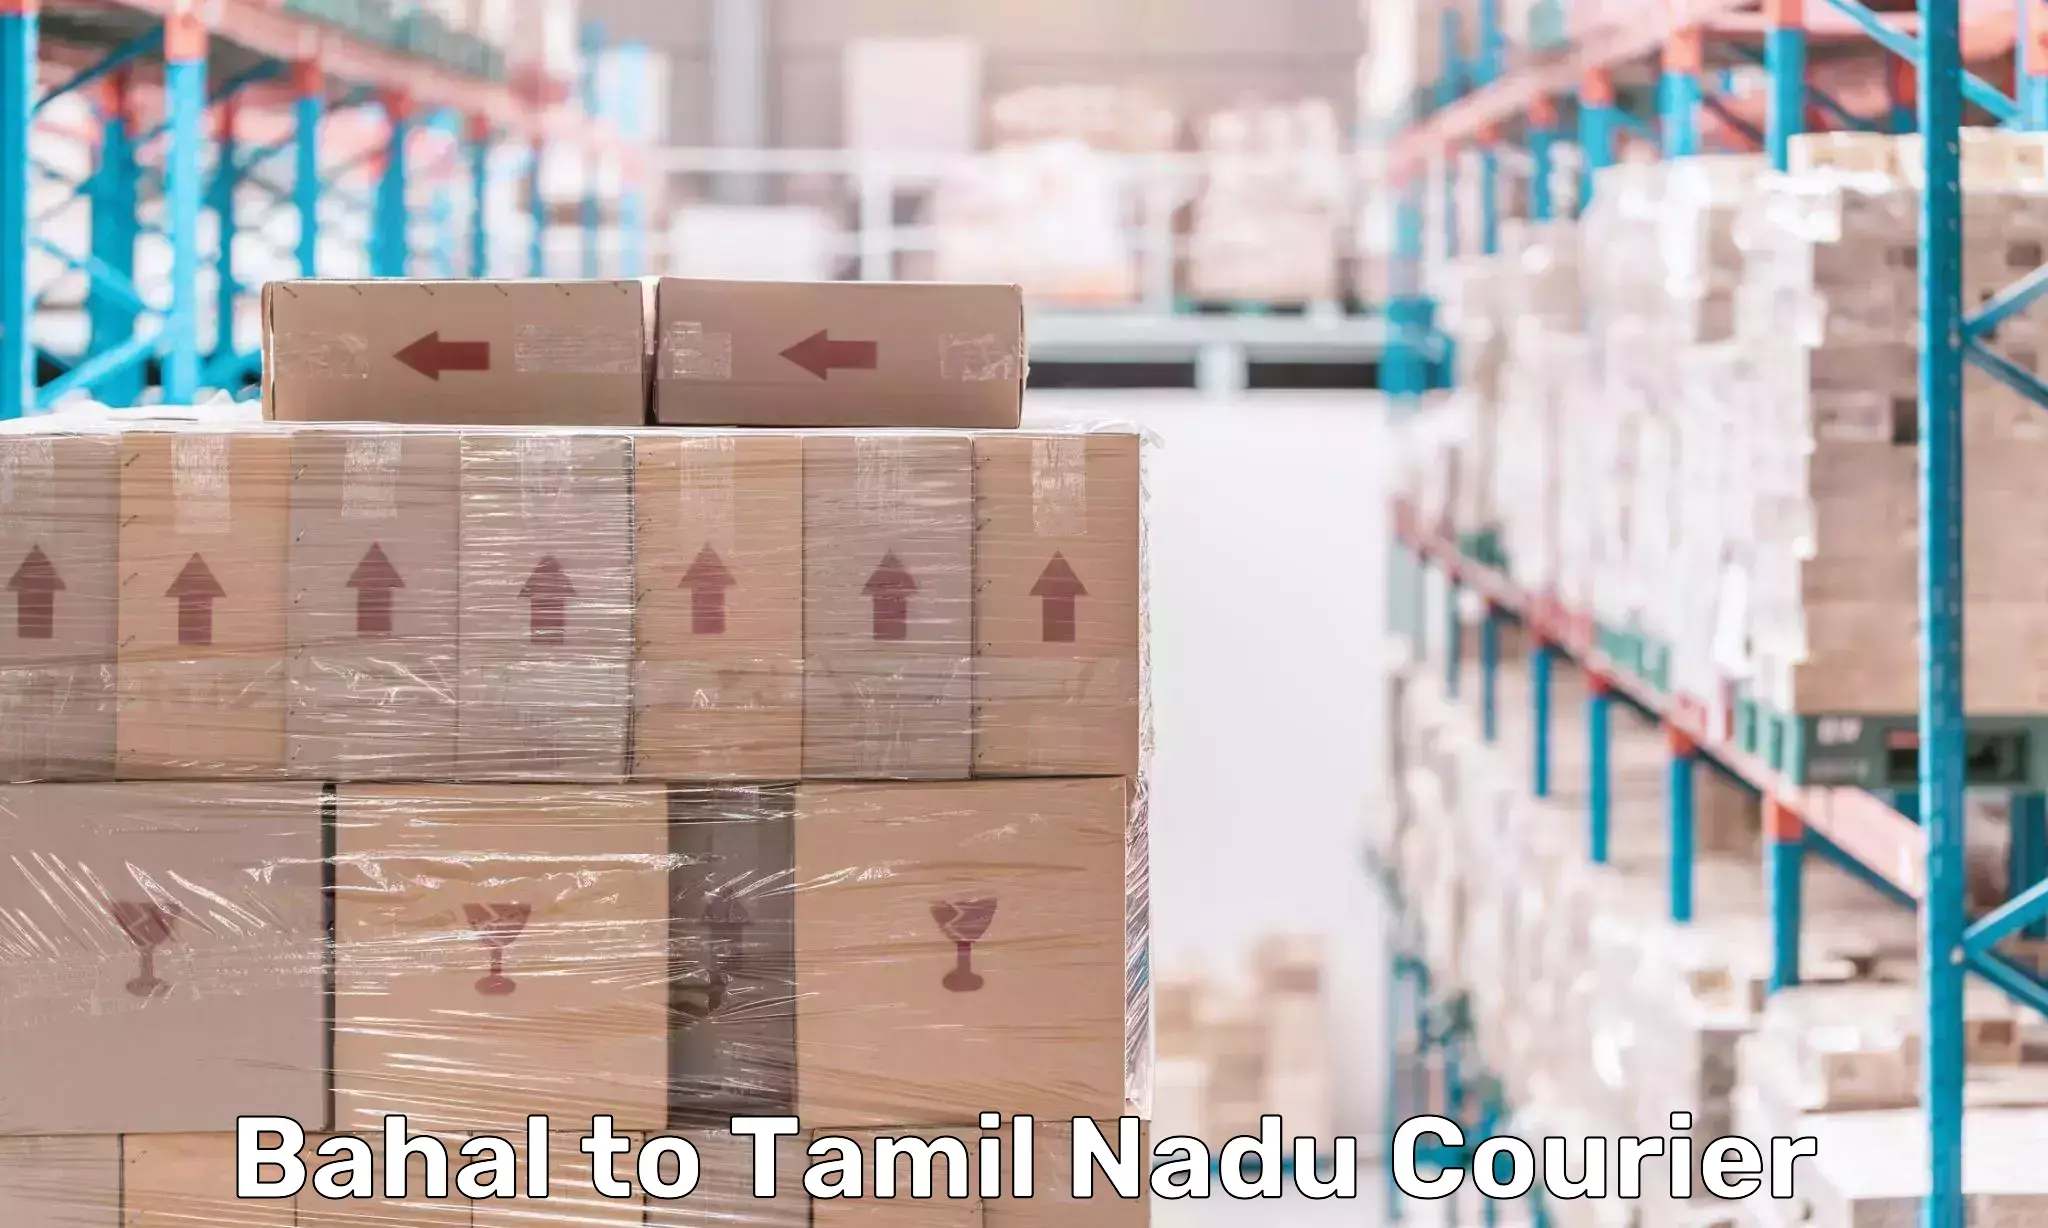 Digital courier platforms Bahal to Tamil Nadu